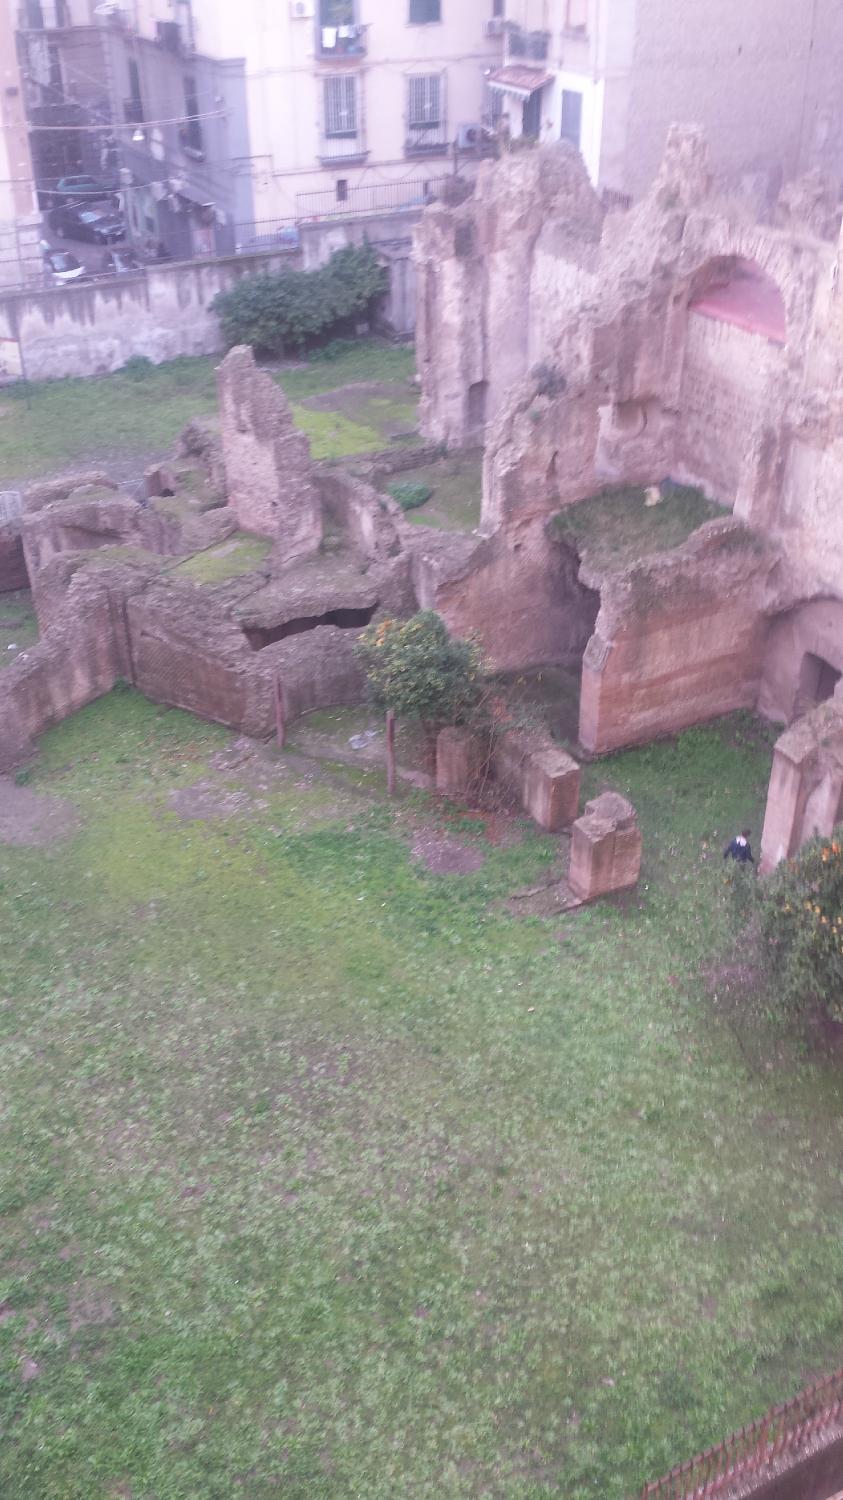 Area Archeologica di Carminiello ai Mannesi